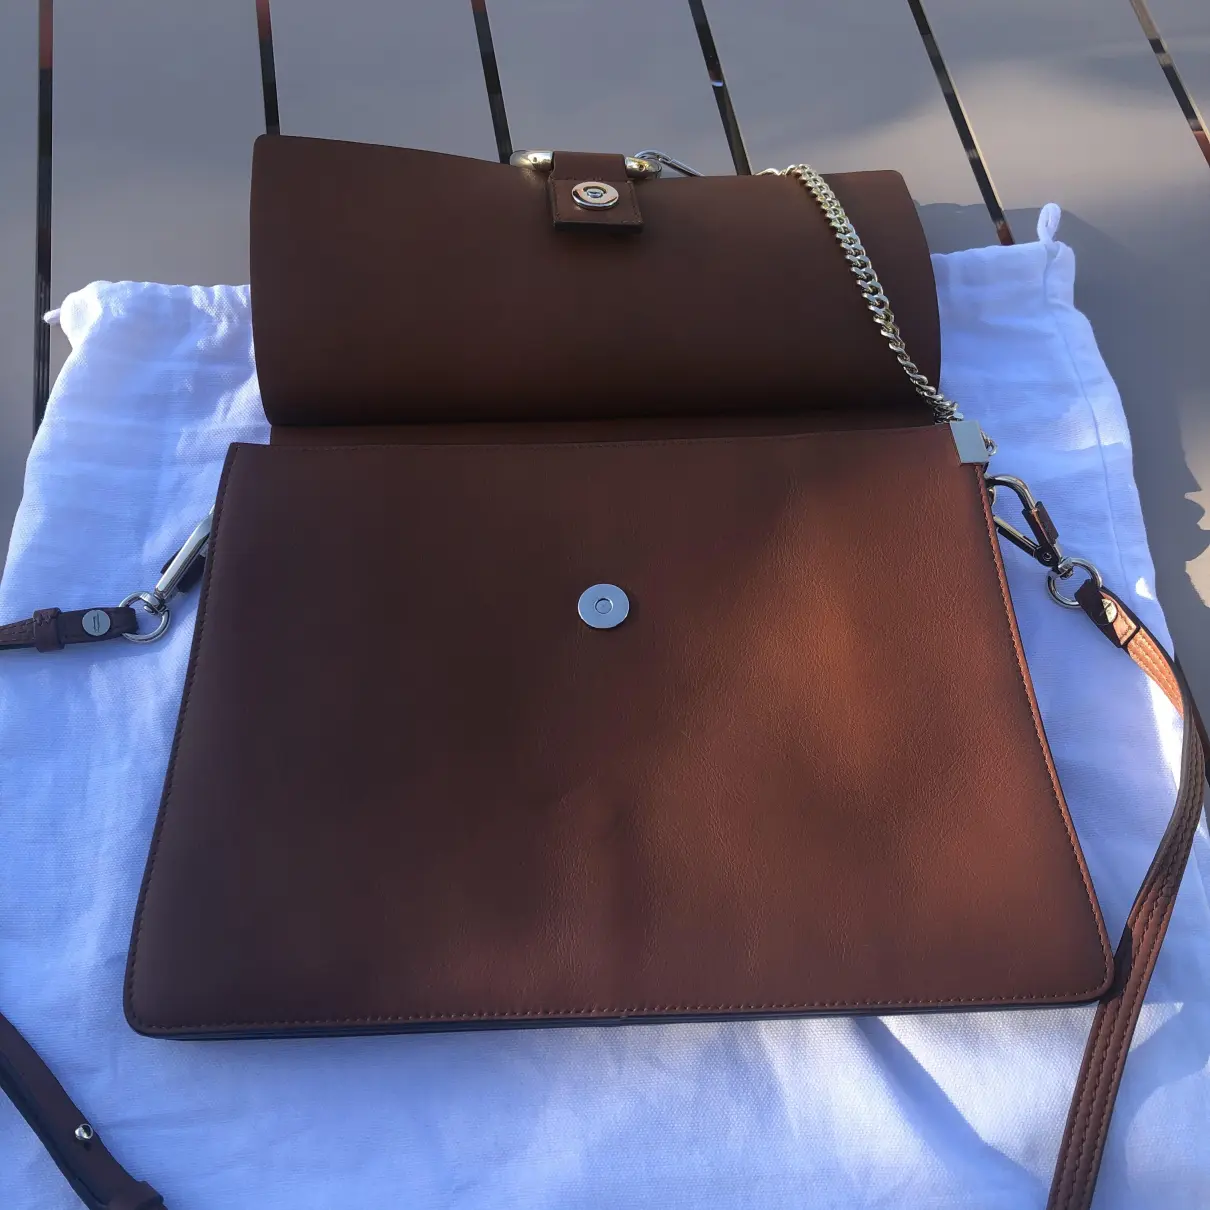 Faye leather handbag Chloé